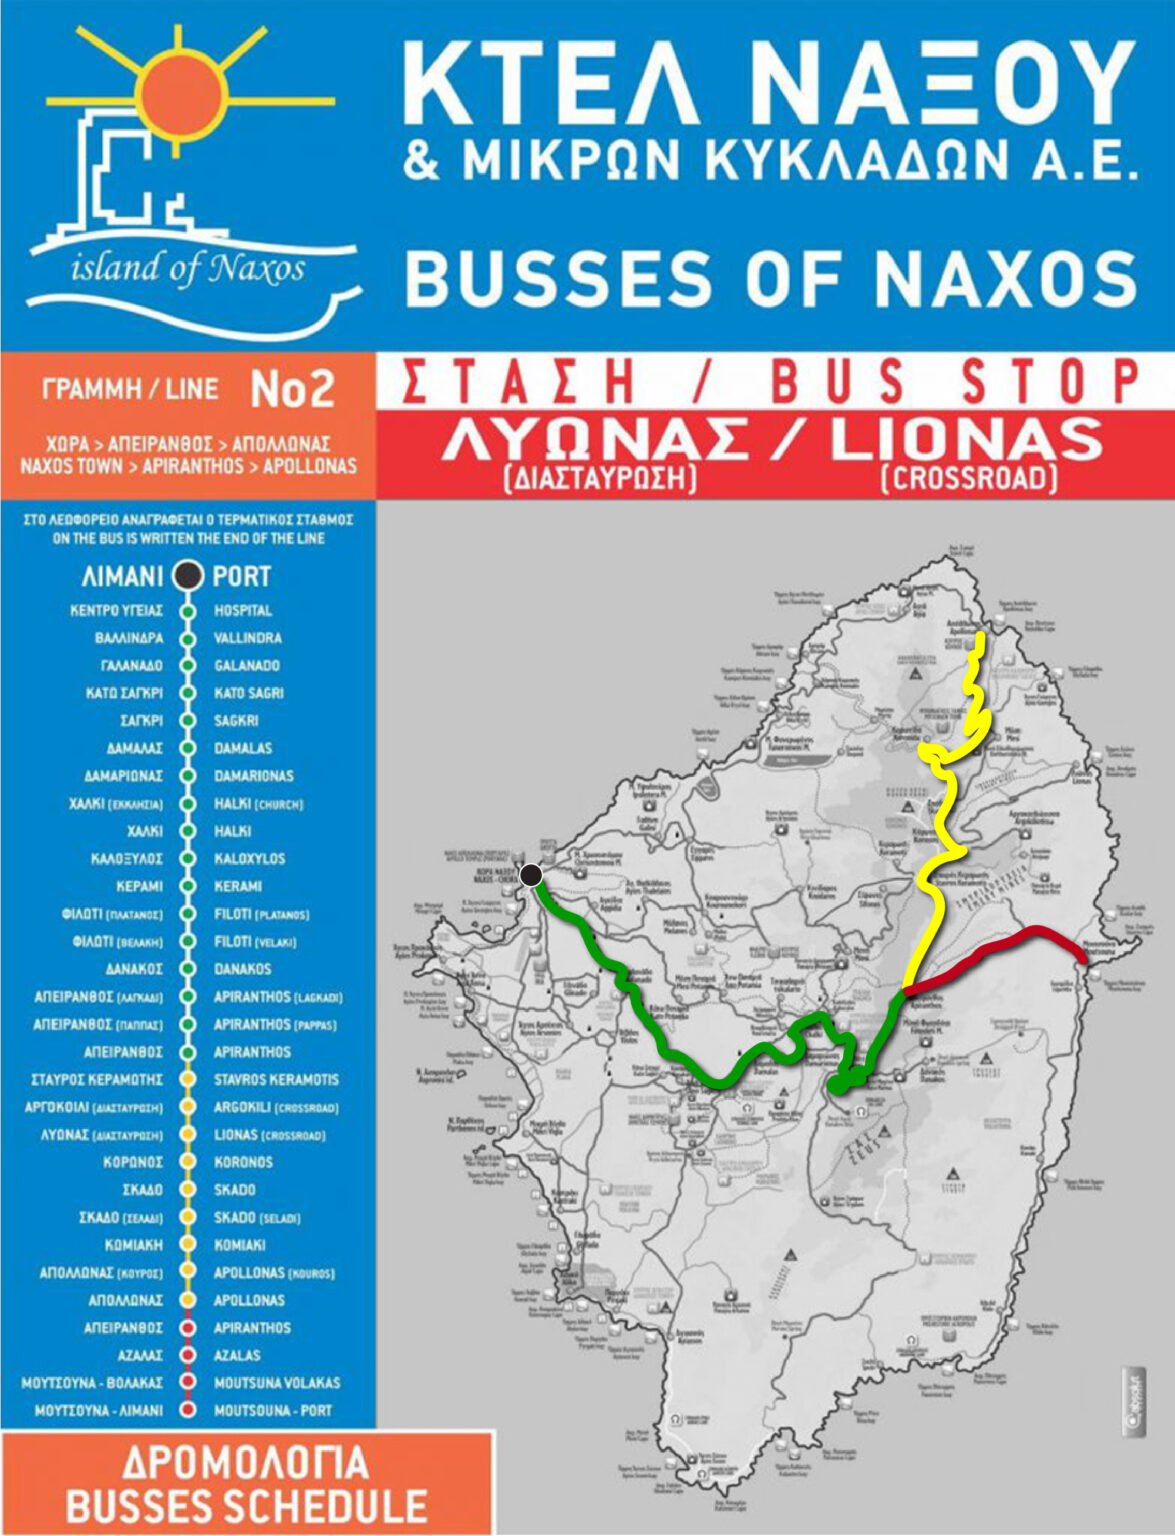 Naxos Public Bus Routes, Tickets, Schedules